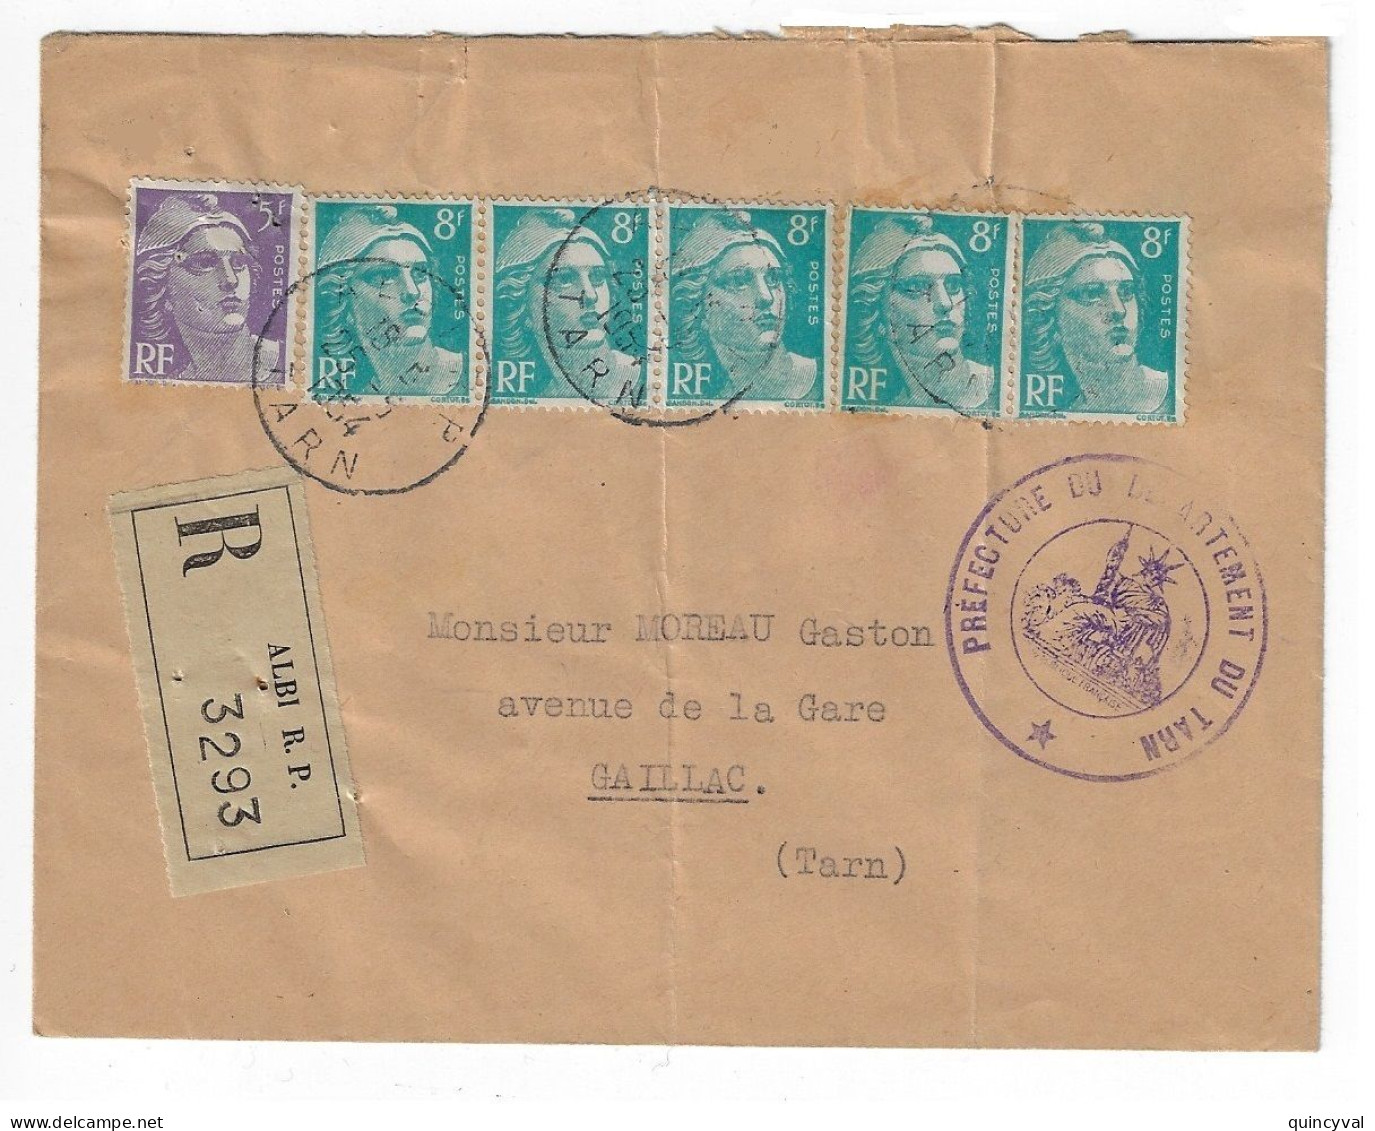 ALBI R. P. Tarn Lettre Recommandée Préfecture Gandon 8 F Emeraude 5 F Violet Yv 883 810 Ob 25 5 1954 - Briefe U. Dokumente